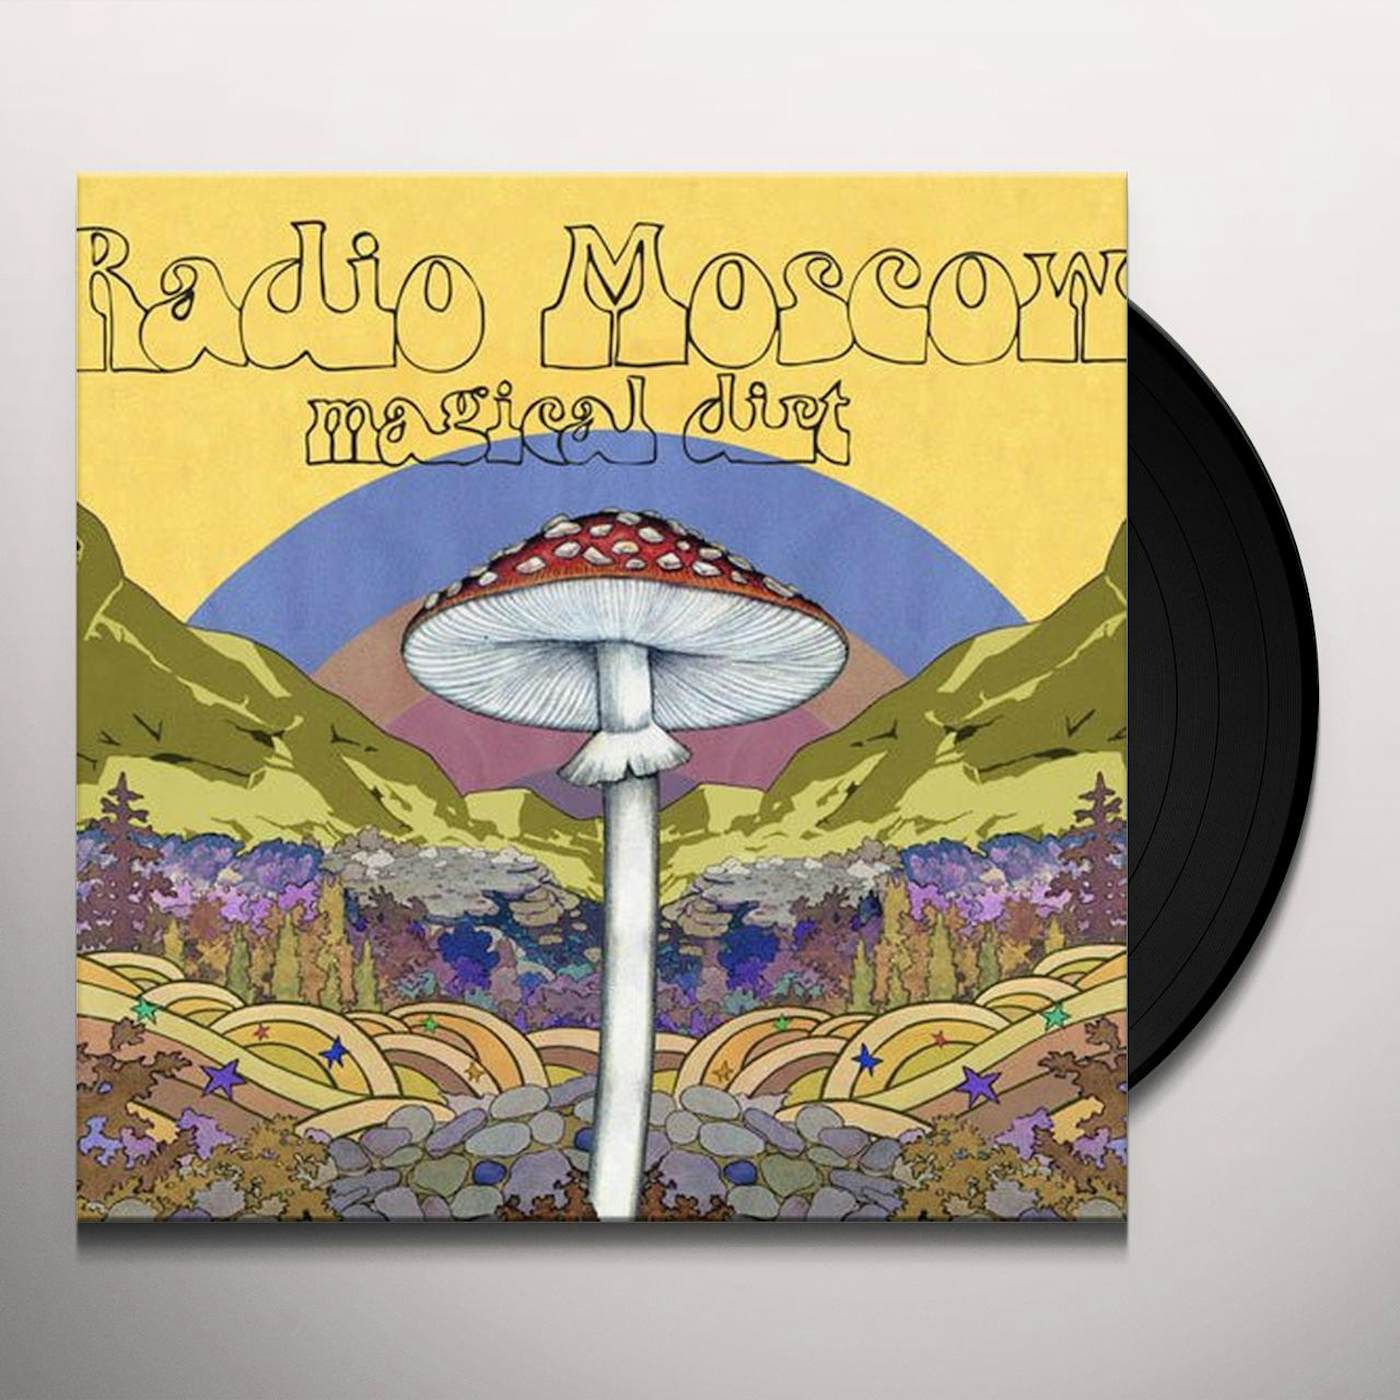 Radio Moscow MAGICAL DIRT Vinyl Record